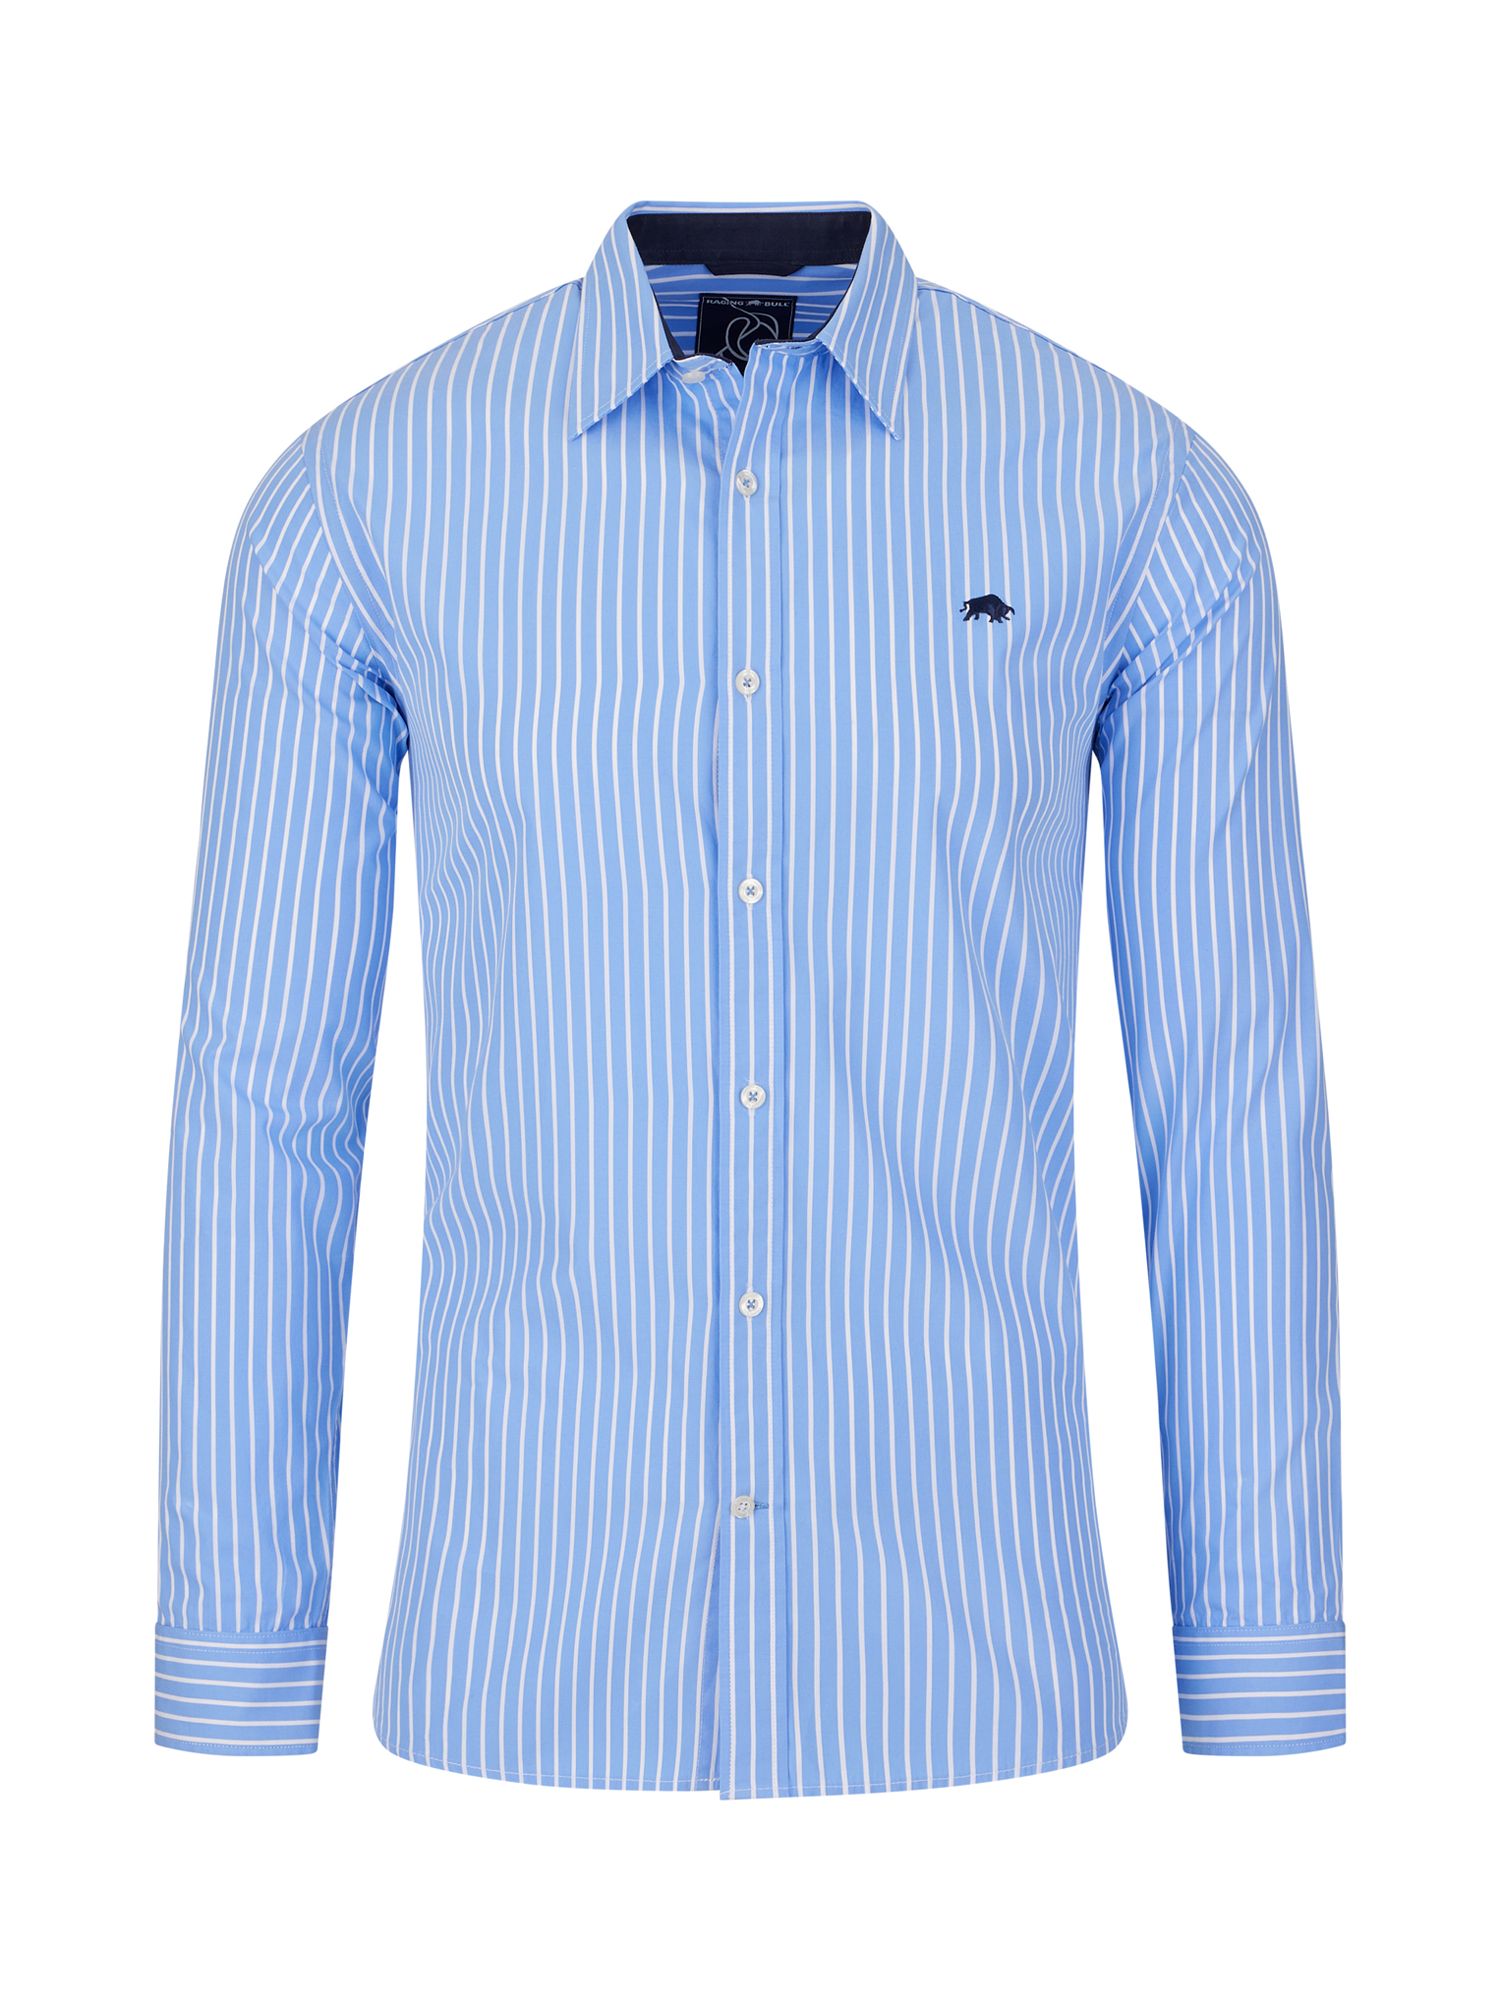 Raging Bull Classic Long Sleeve Stripe Shirt, Blue/White at John Lewis ...